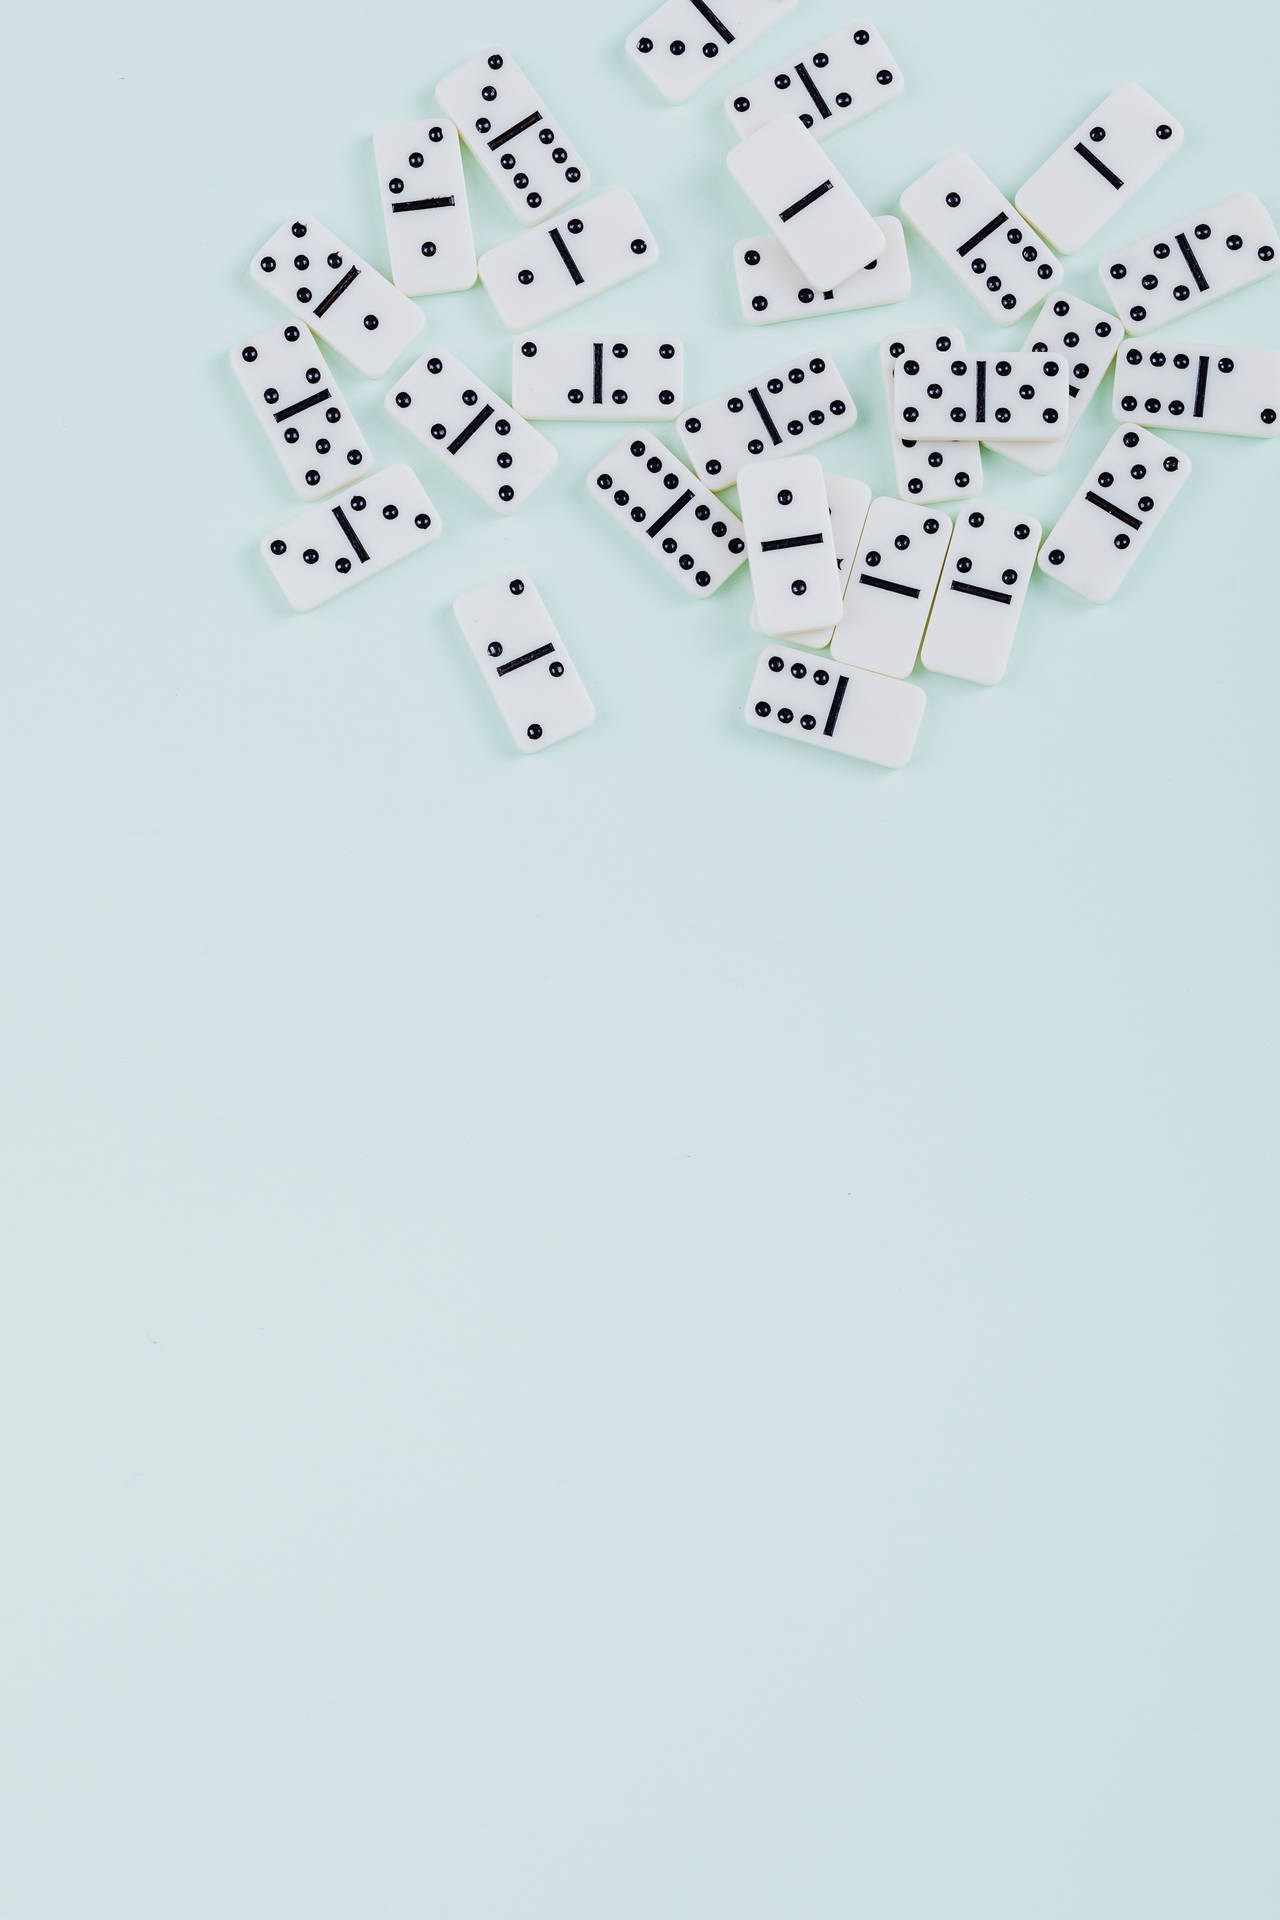 Scattered Dominos Wallpaper